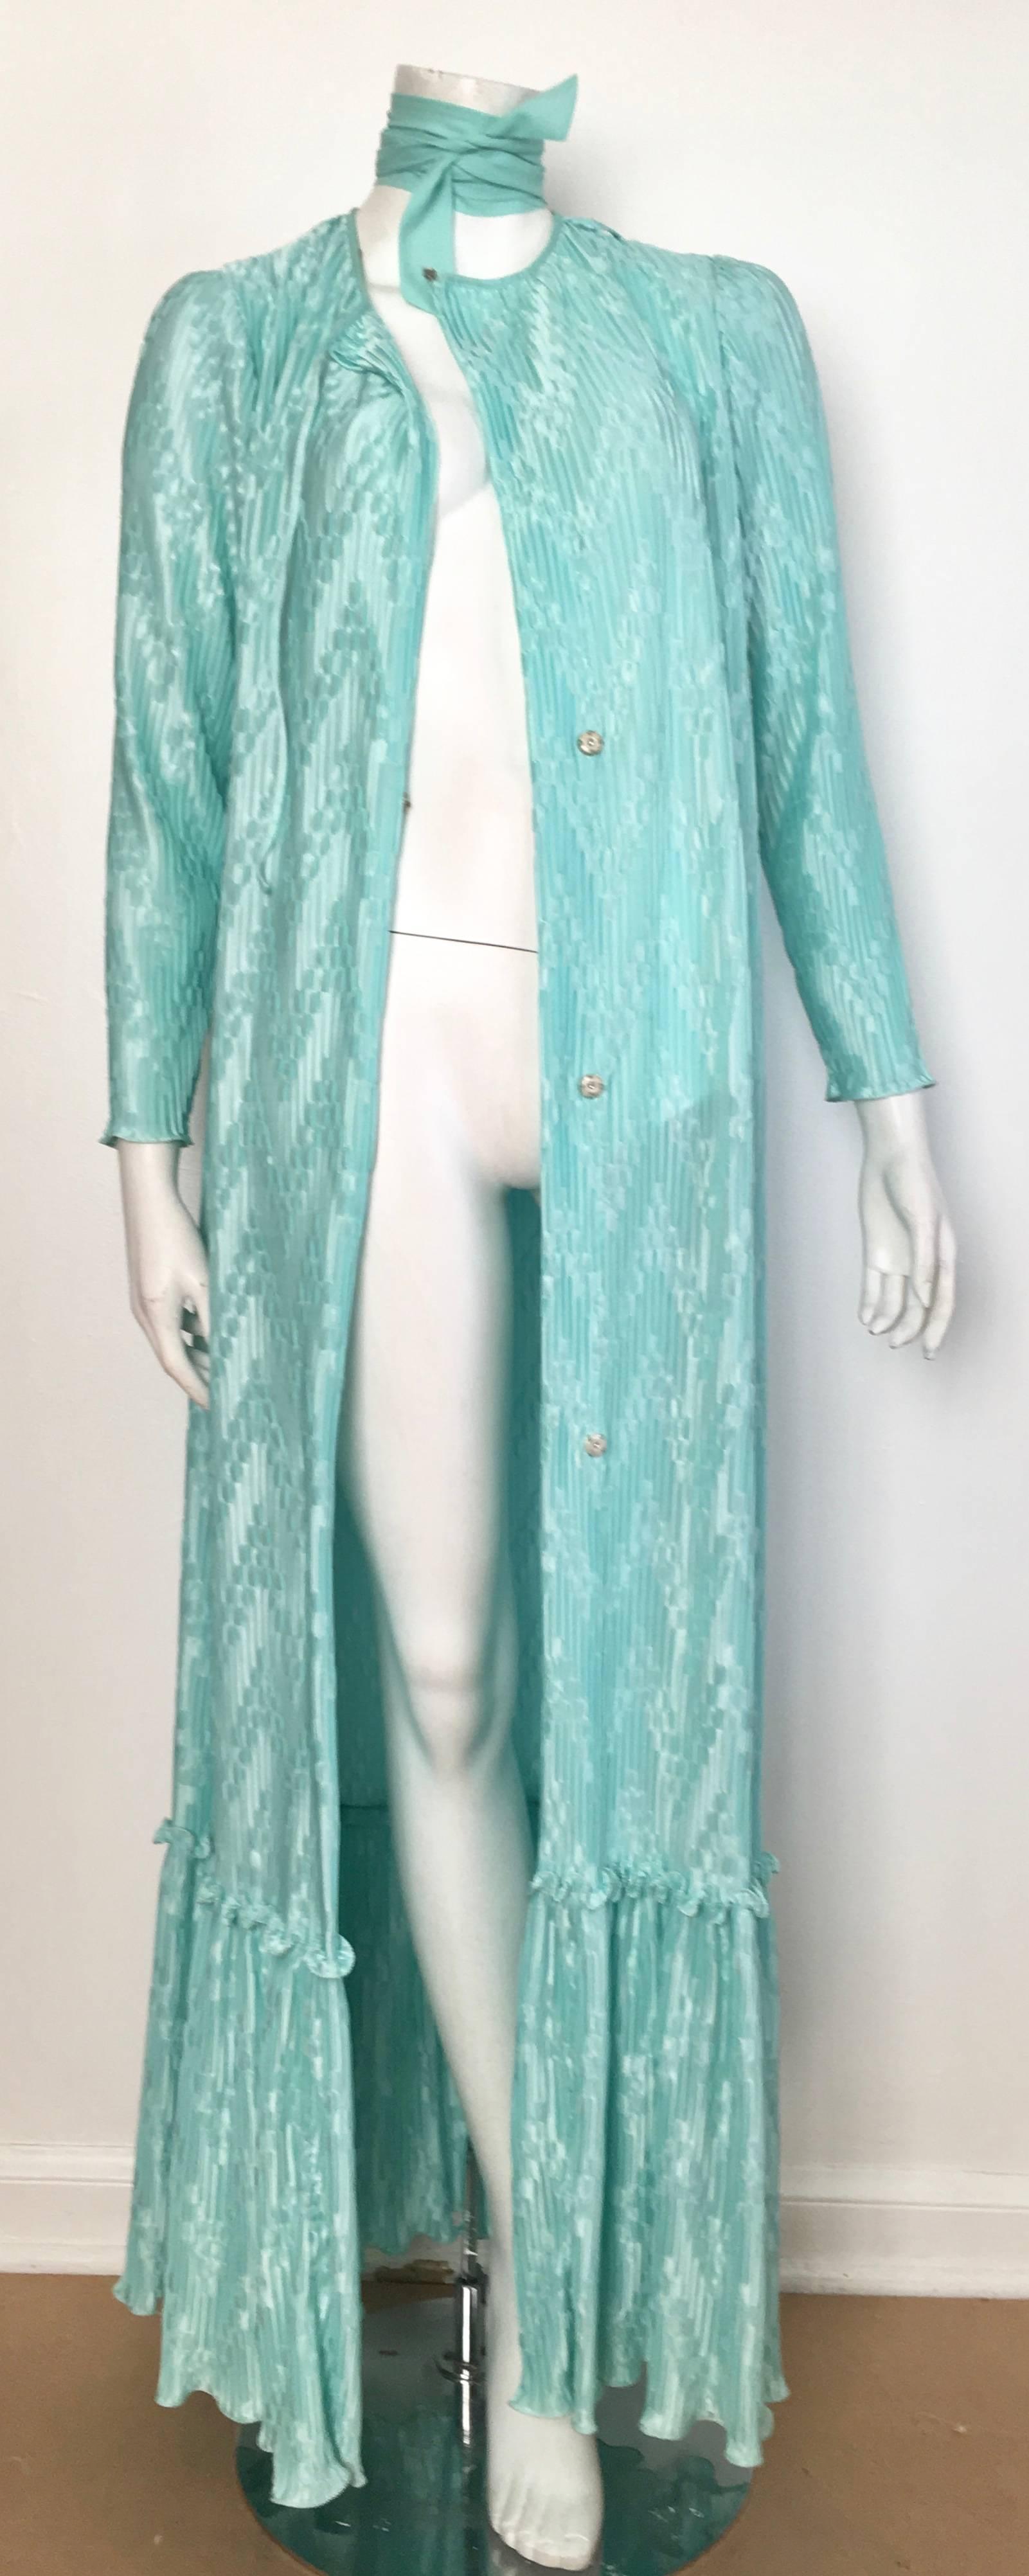 Mary McFadden for Bonwit Teller 1970s Aqua Maxi Dress with Belt Size Small.  3